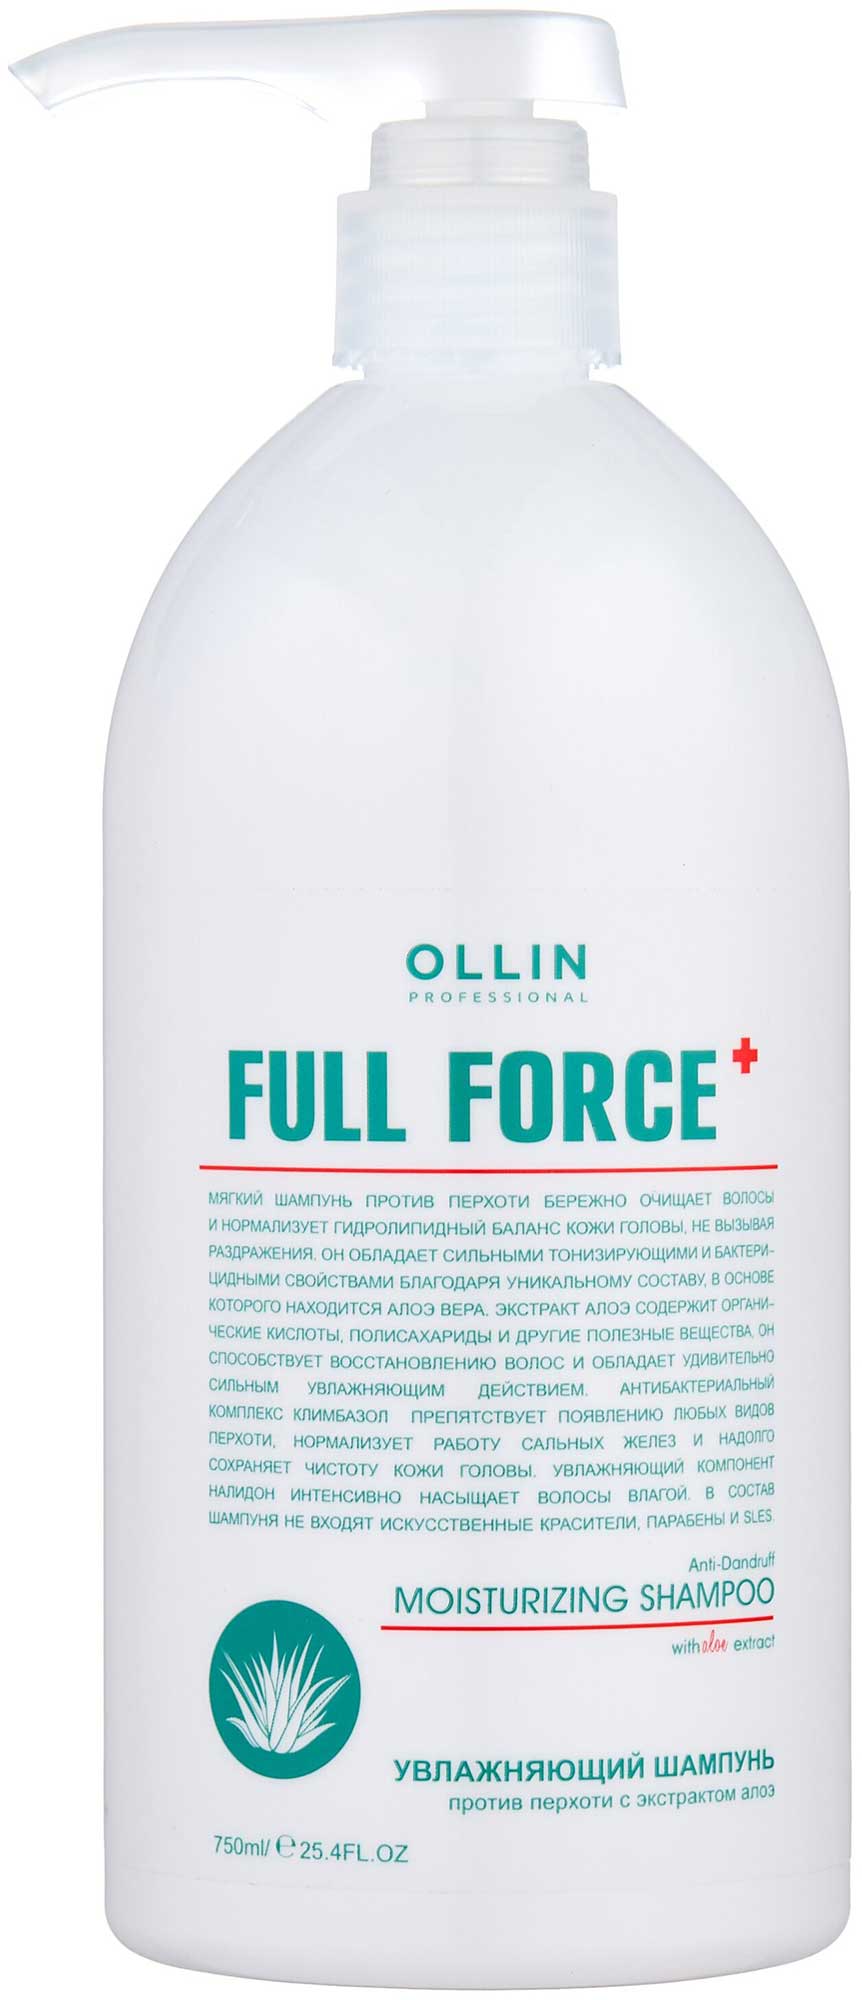 Увлажняющий шампунь Ollin Professional Full Force против перхоти с экстрактом алоэ 750мл